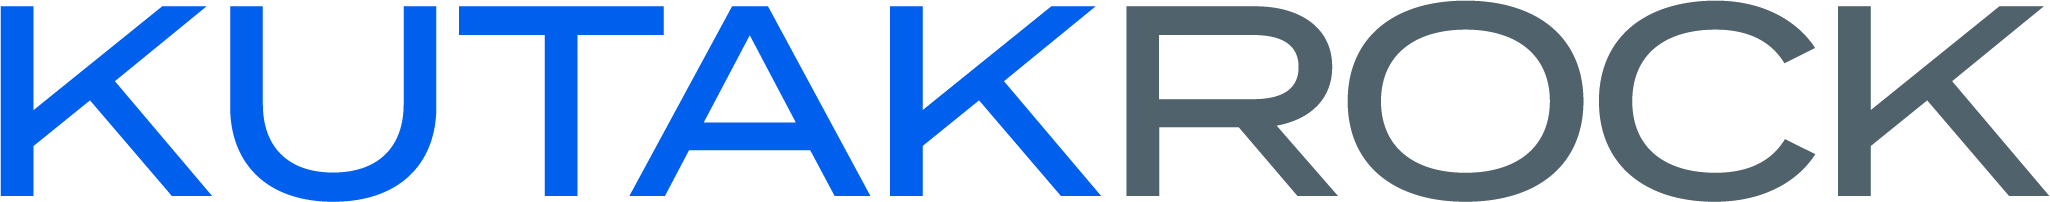 Kutak Rock Logo - Standard